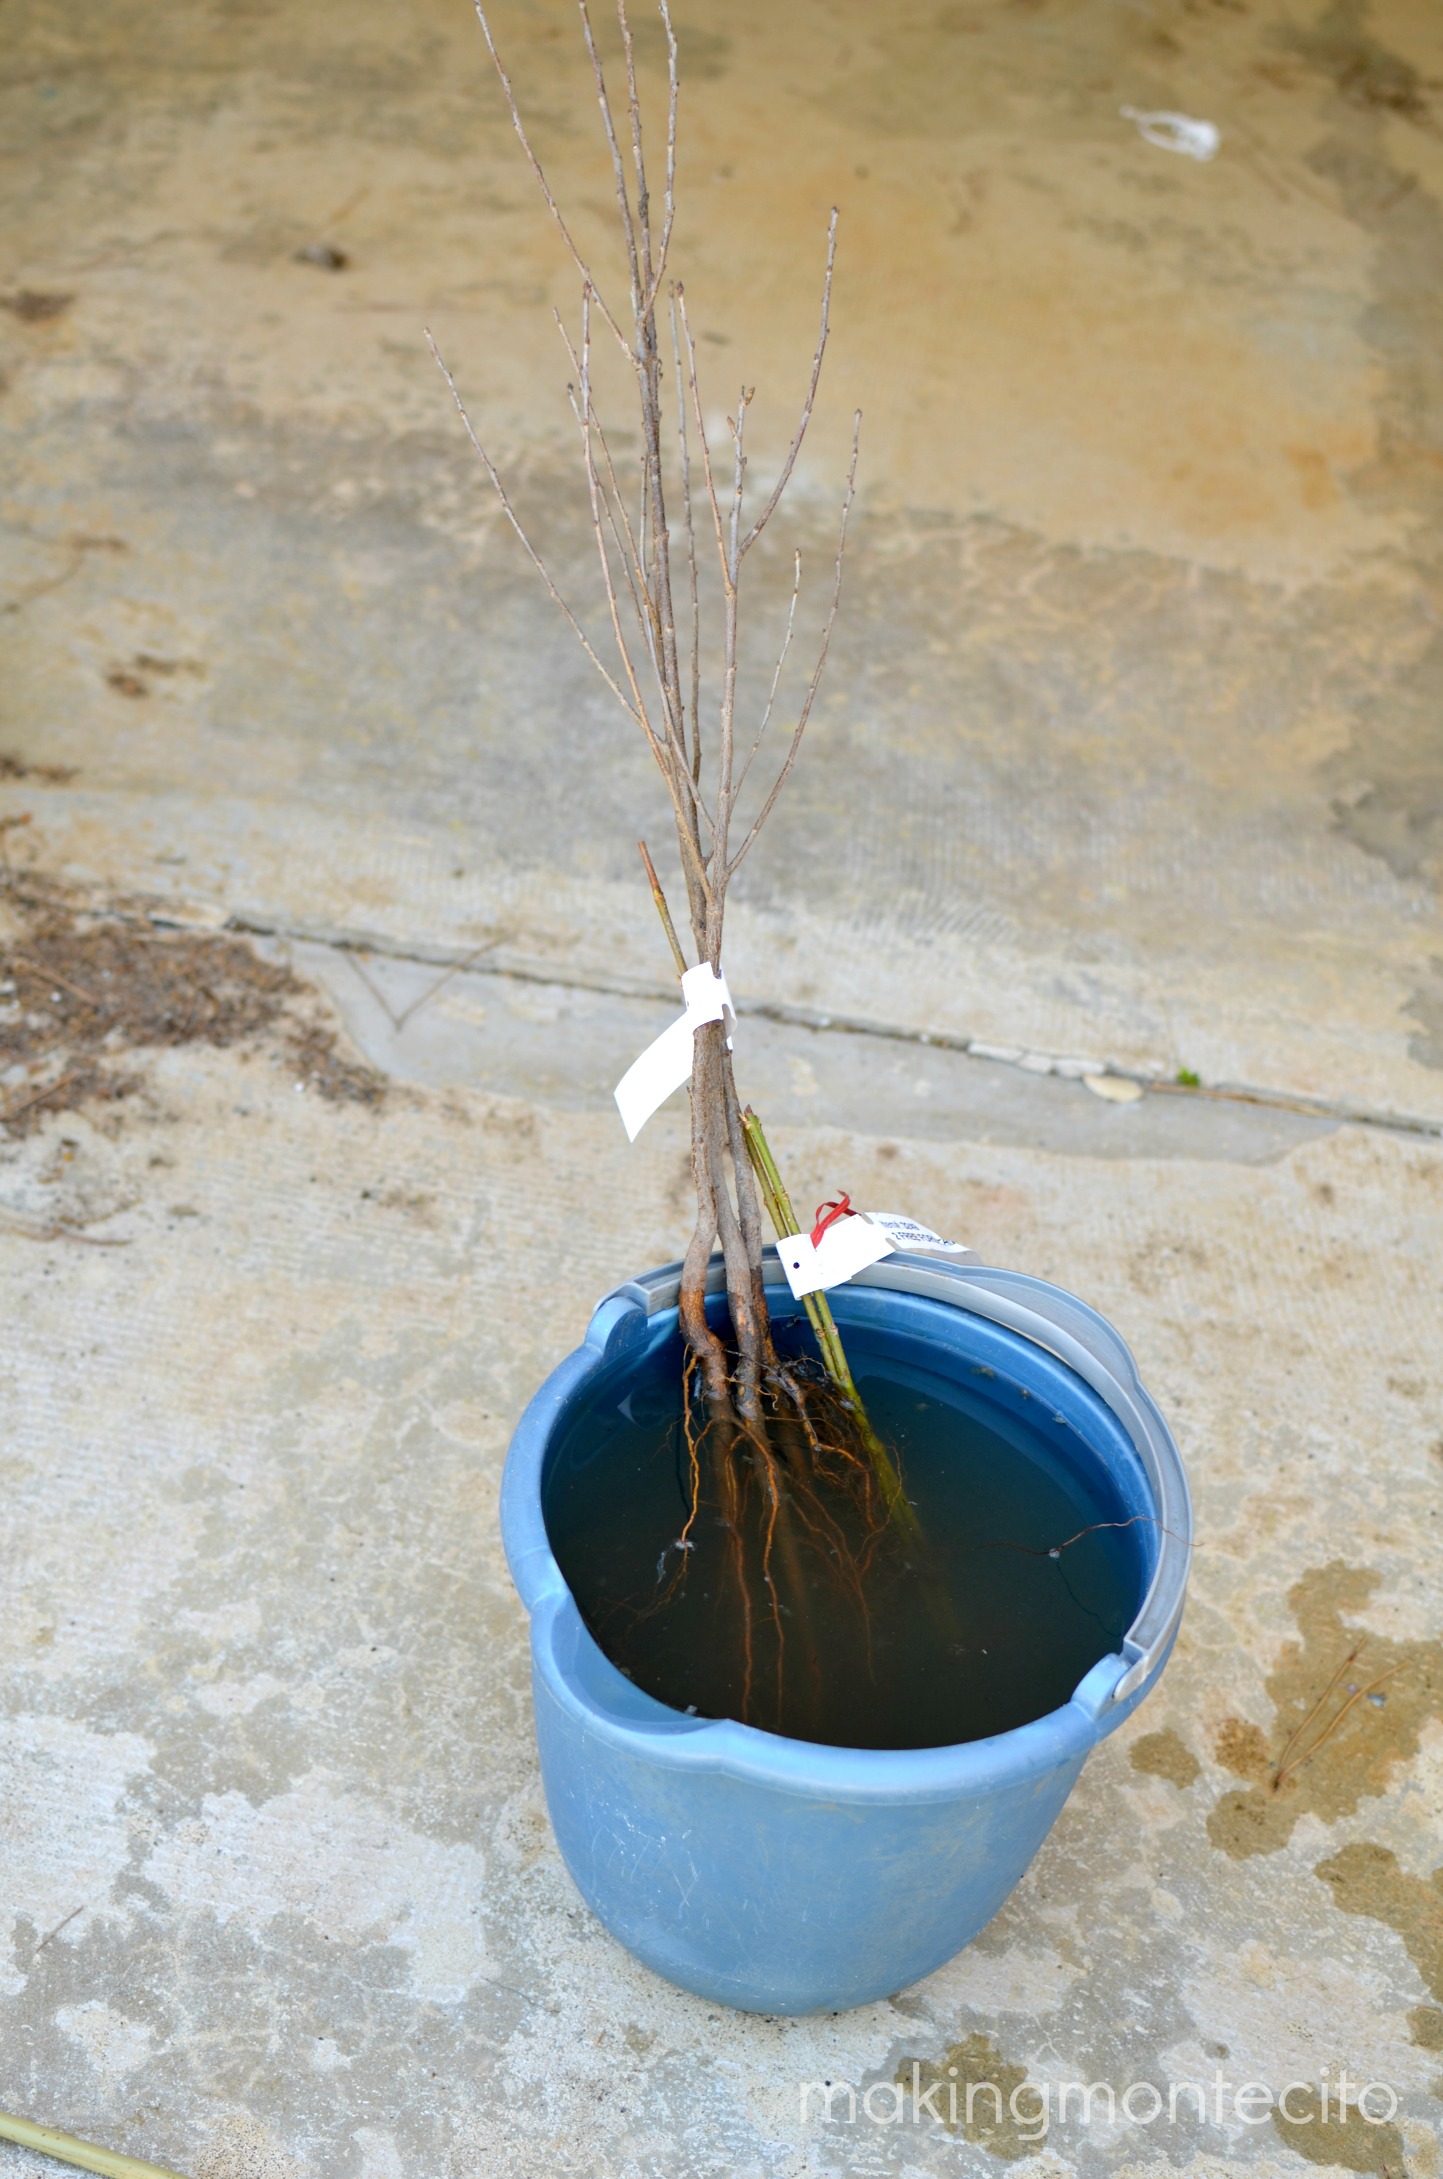 making montecito - planting bare root trees 4